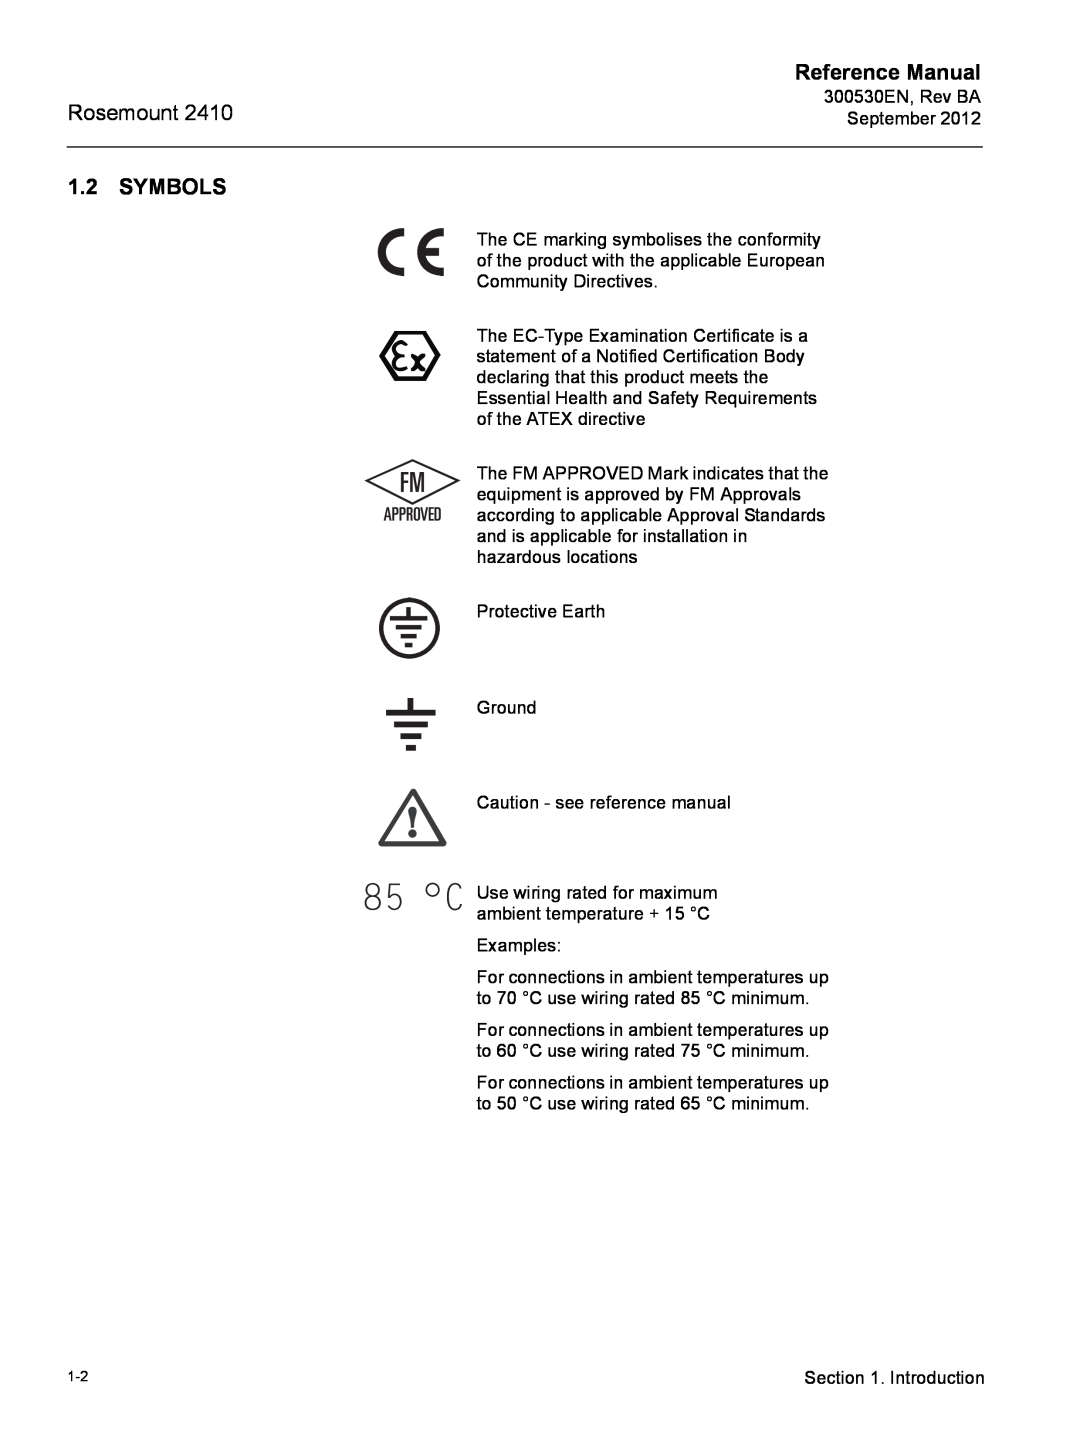 Emerson Process Management Rosemount 2410 manual Symbols, Reference Manual 